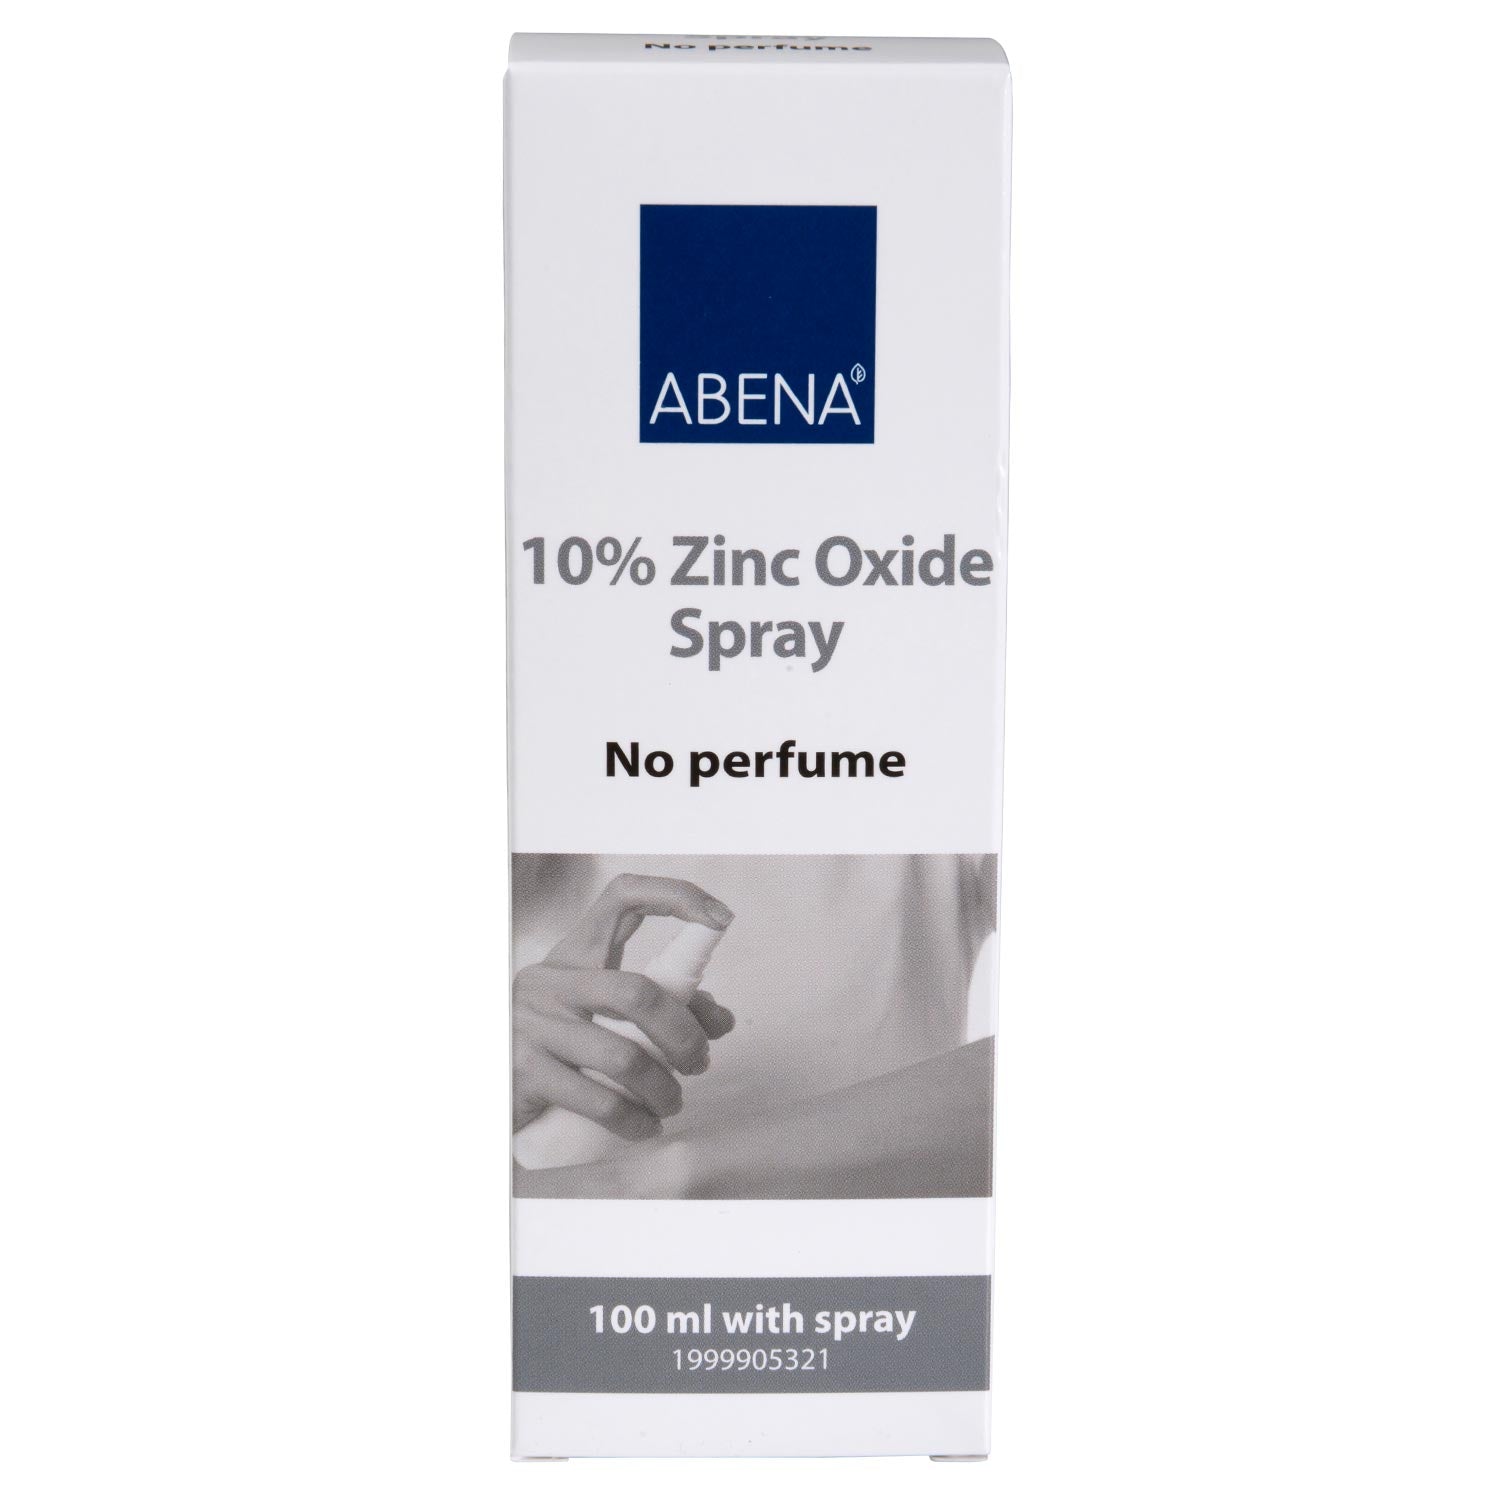 Abena Abena 10% Zinc Oxide Spray 100ml - Each Continence 100mL Each